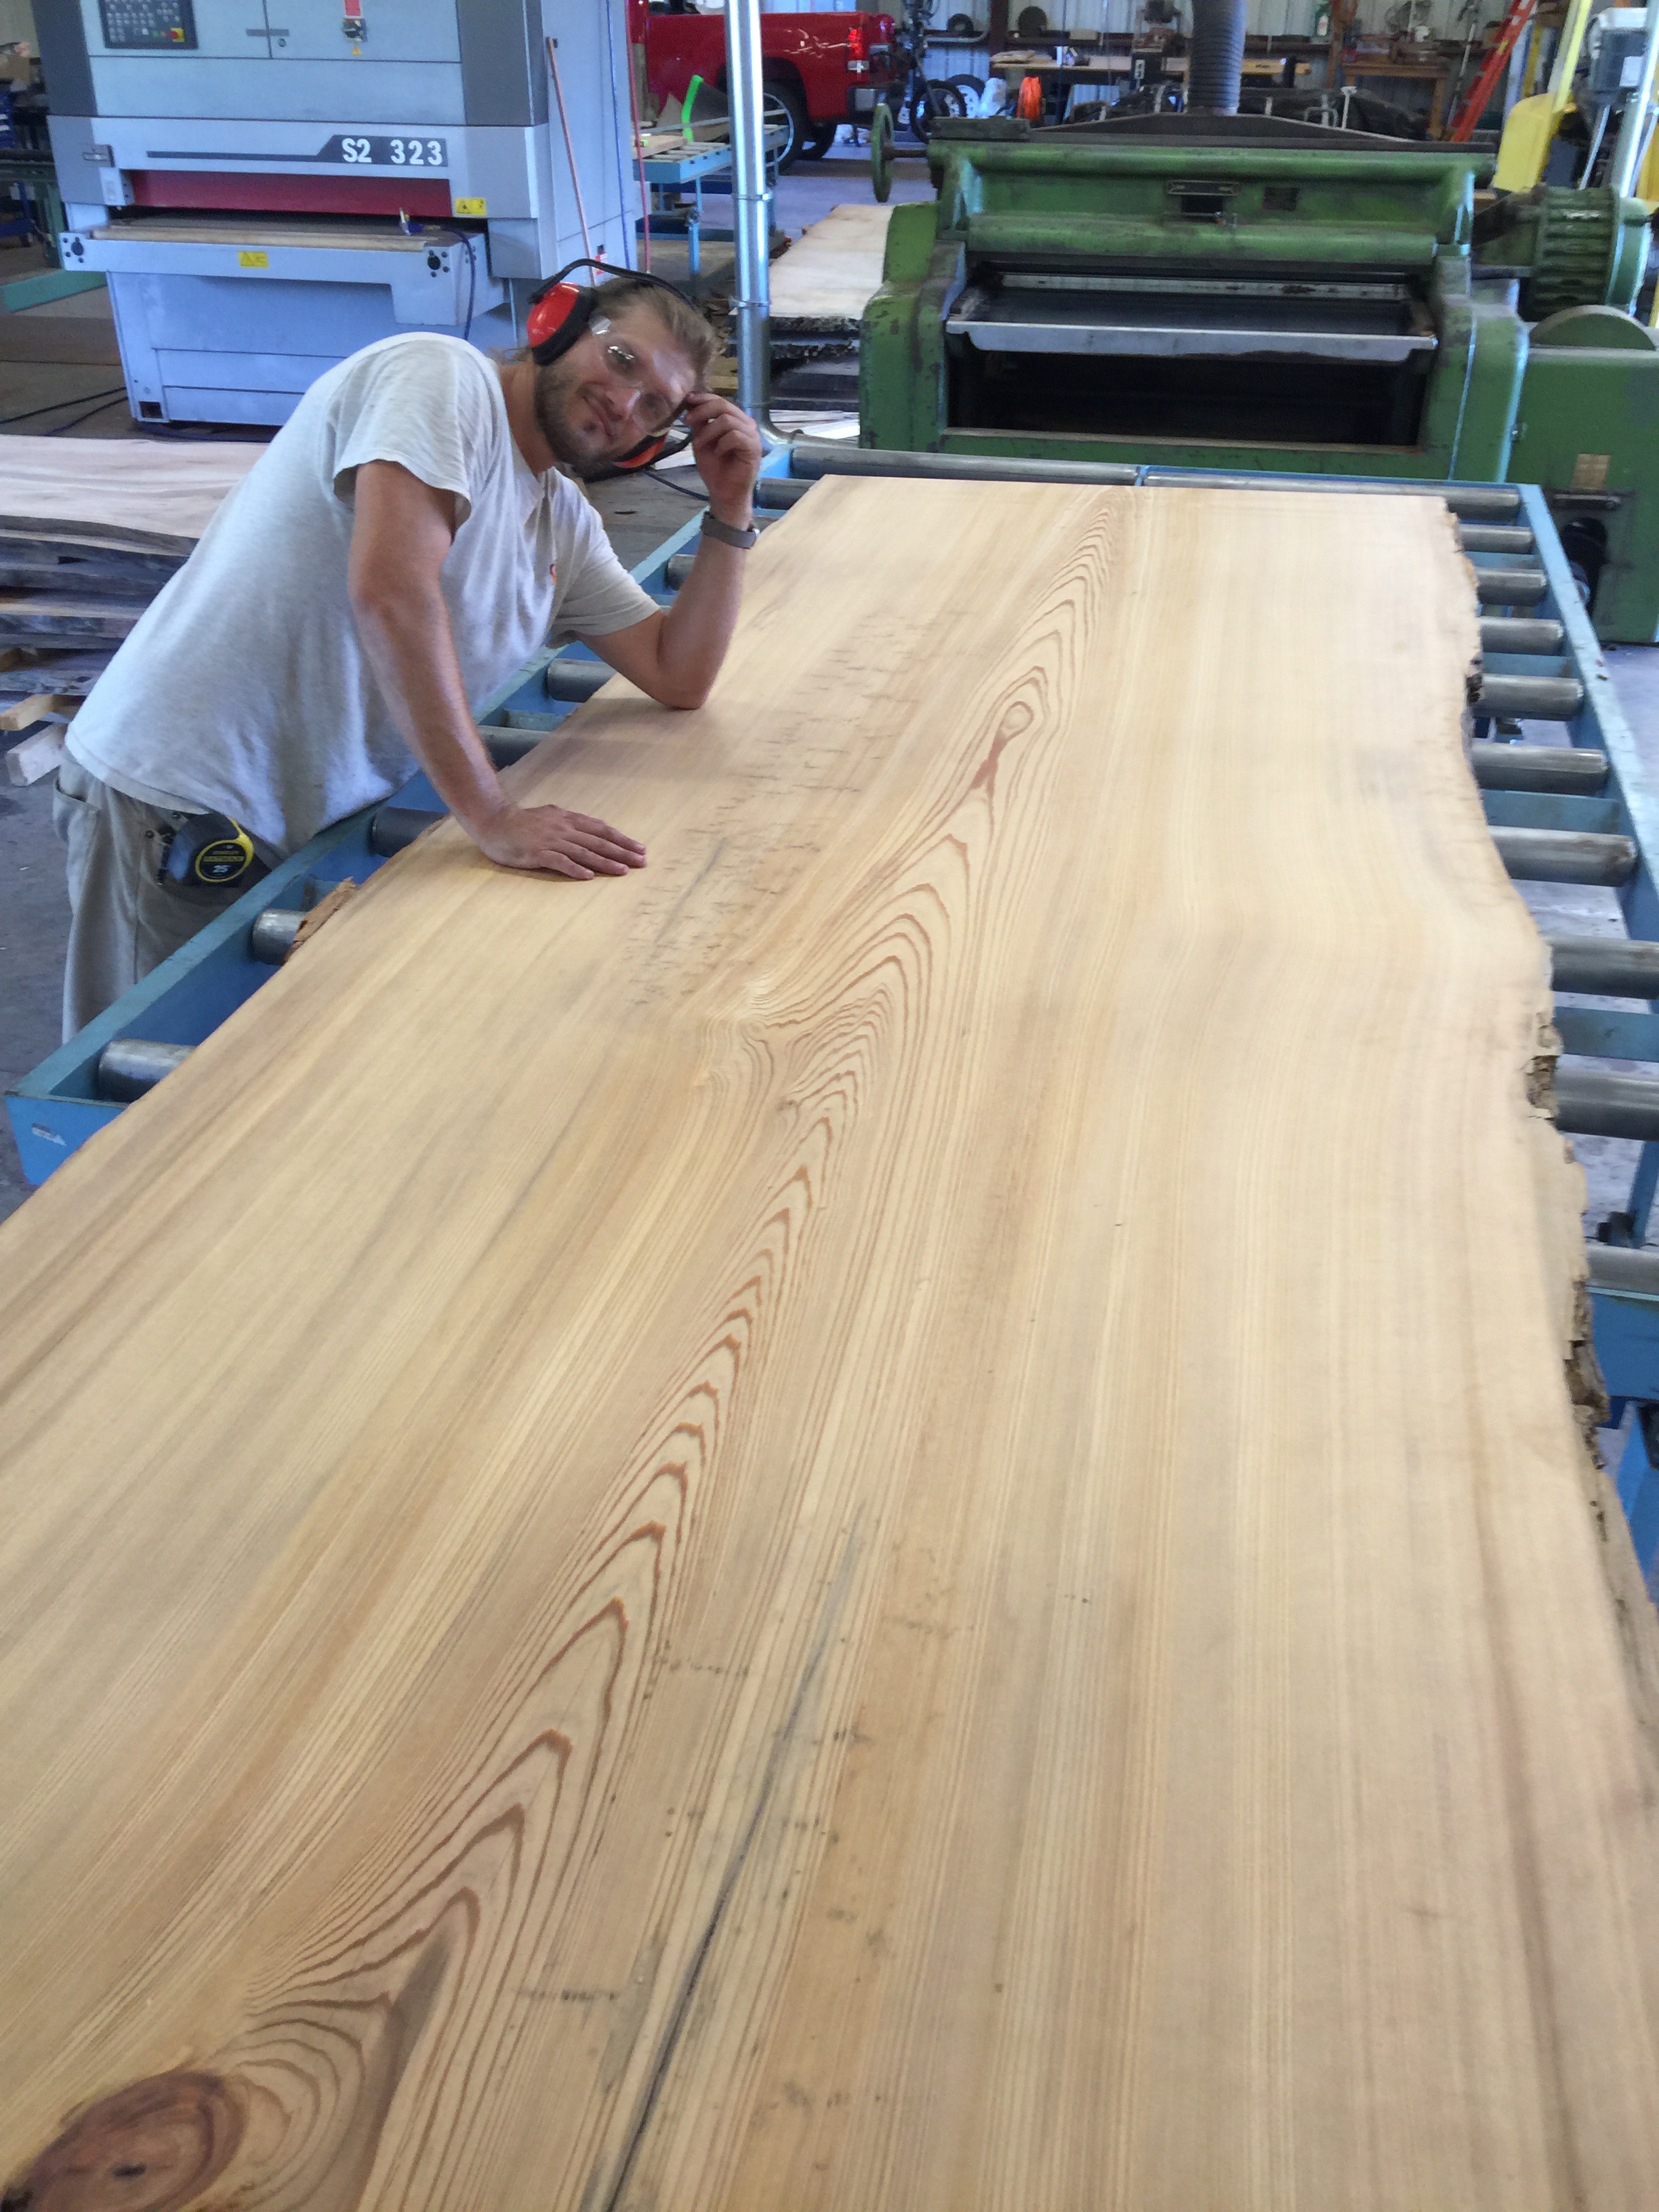 Apple wood lumber for sale